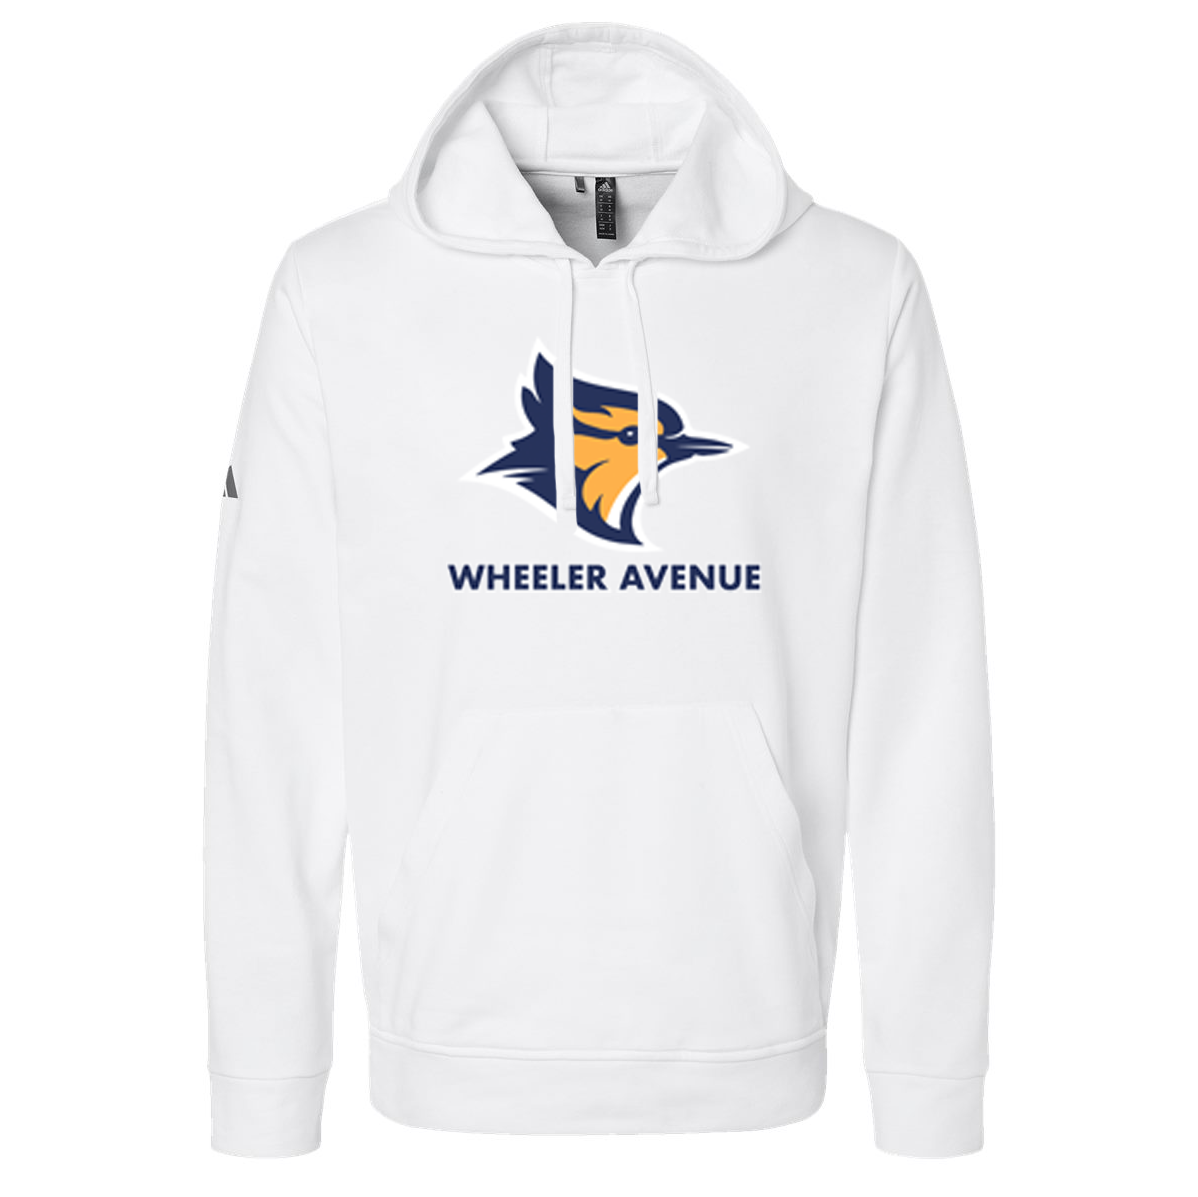 Wheeler Avenue School Adidas Fleece Hooded Sweatshirt